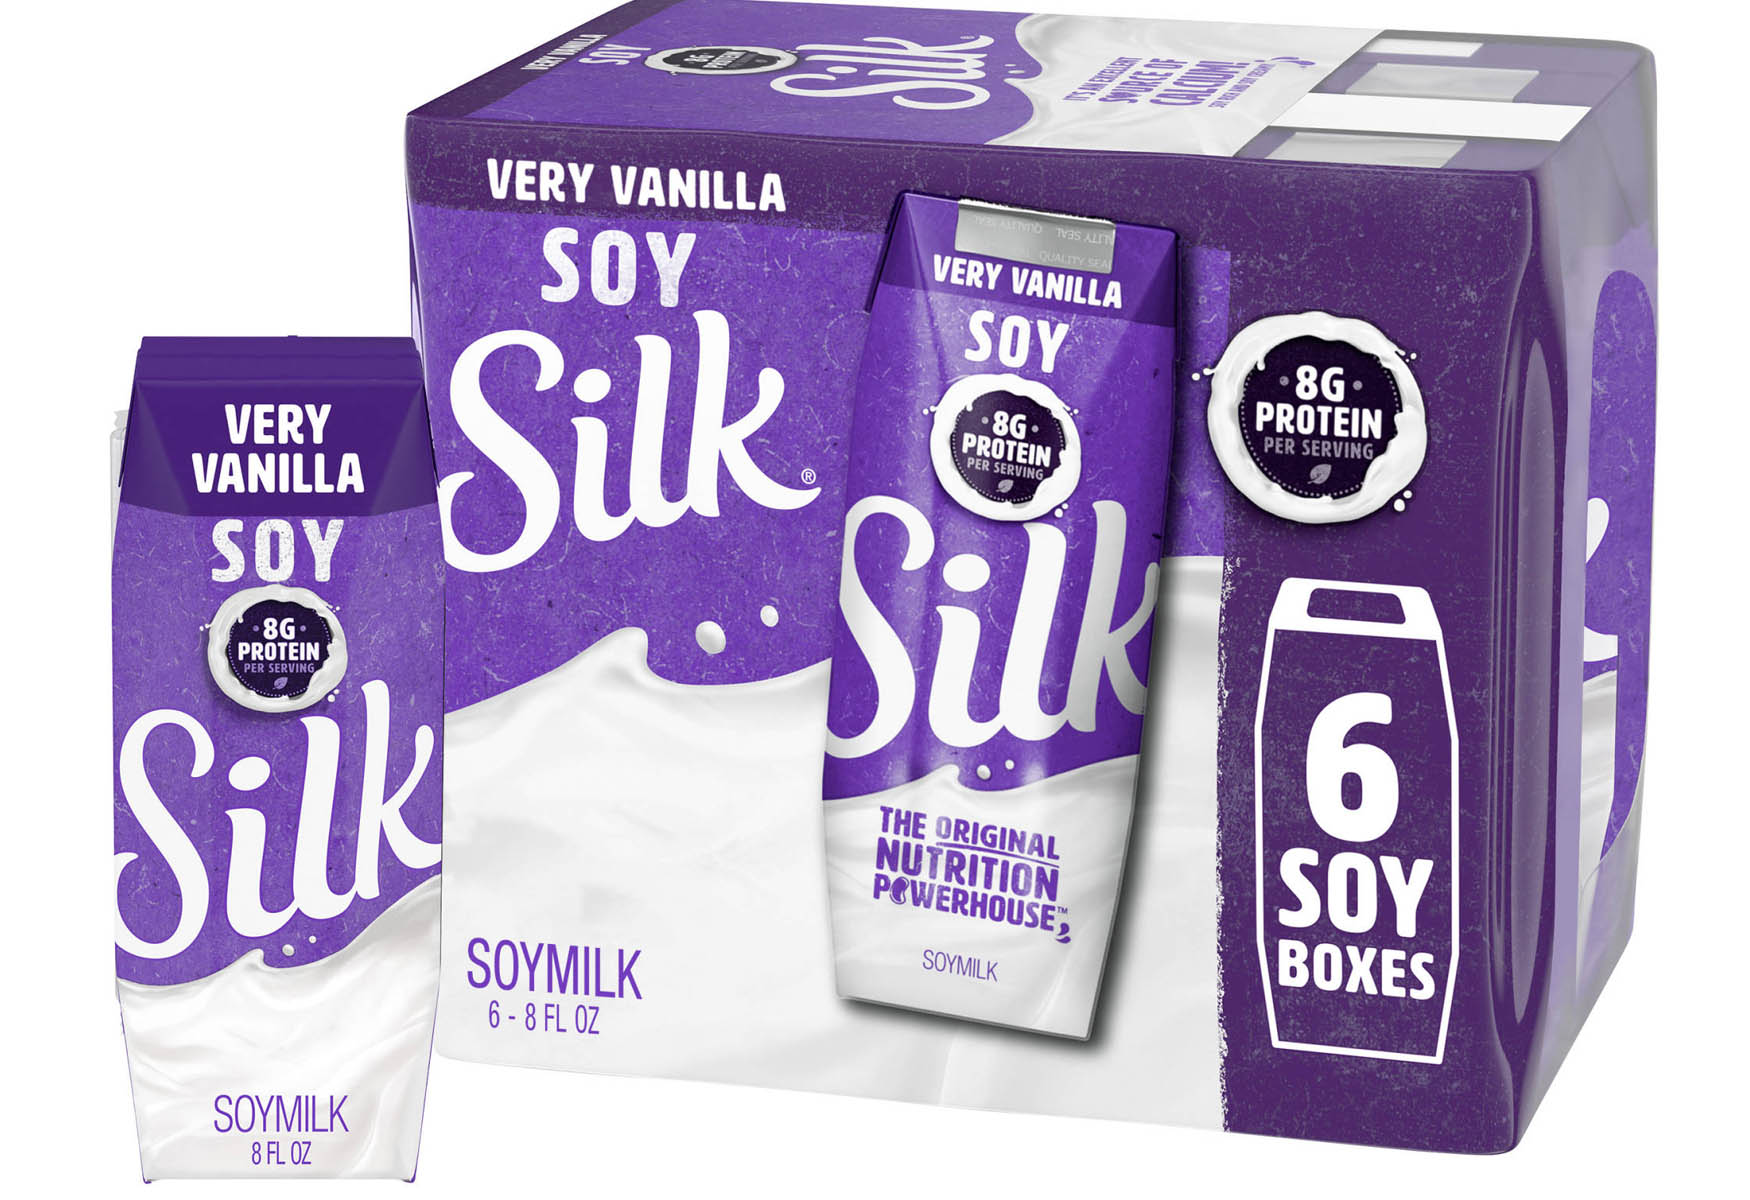 Silk Vanilla Dairy-Free Soy Creamer 16 Oz Carton